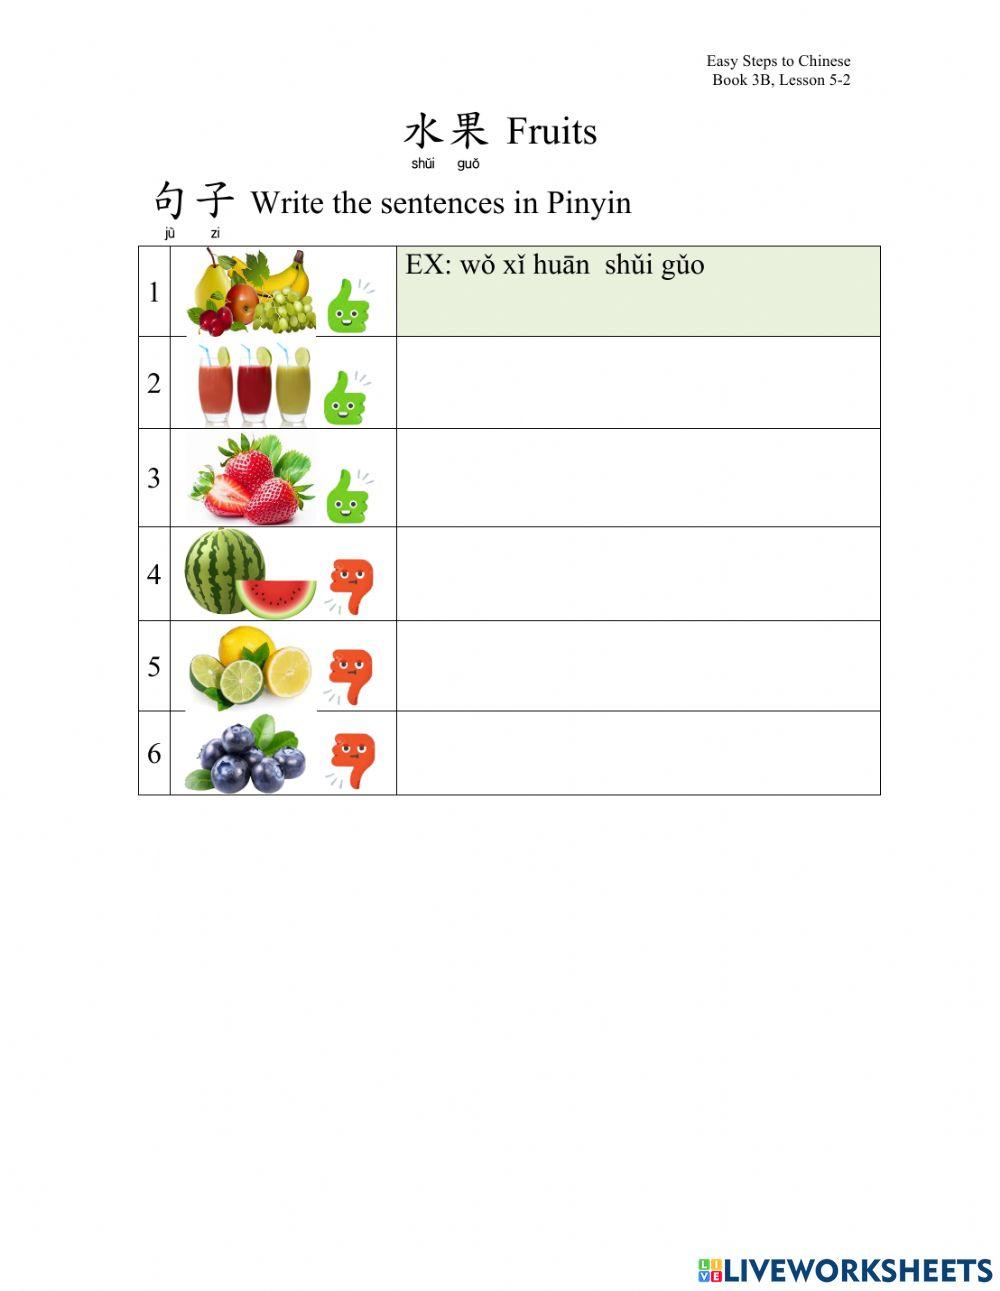 Fruit sentence-writing pinyin